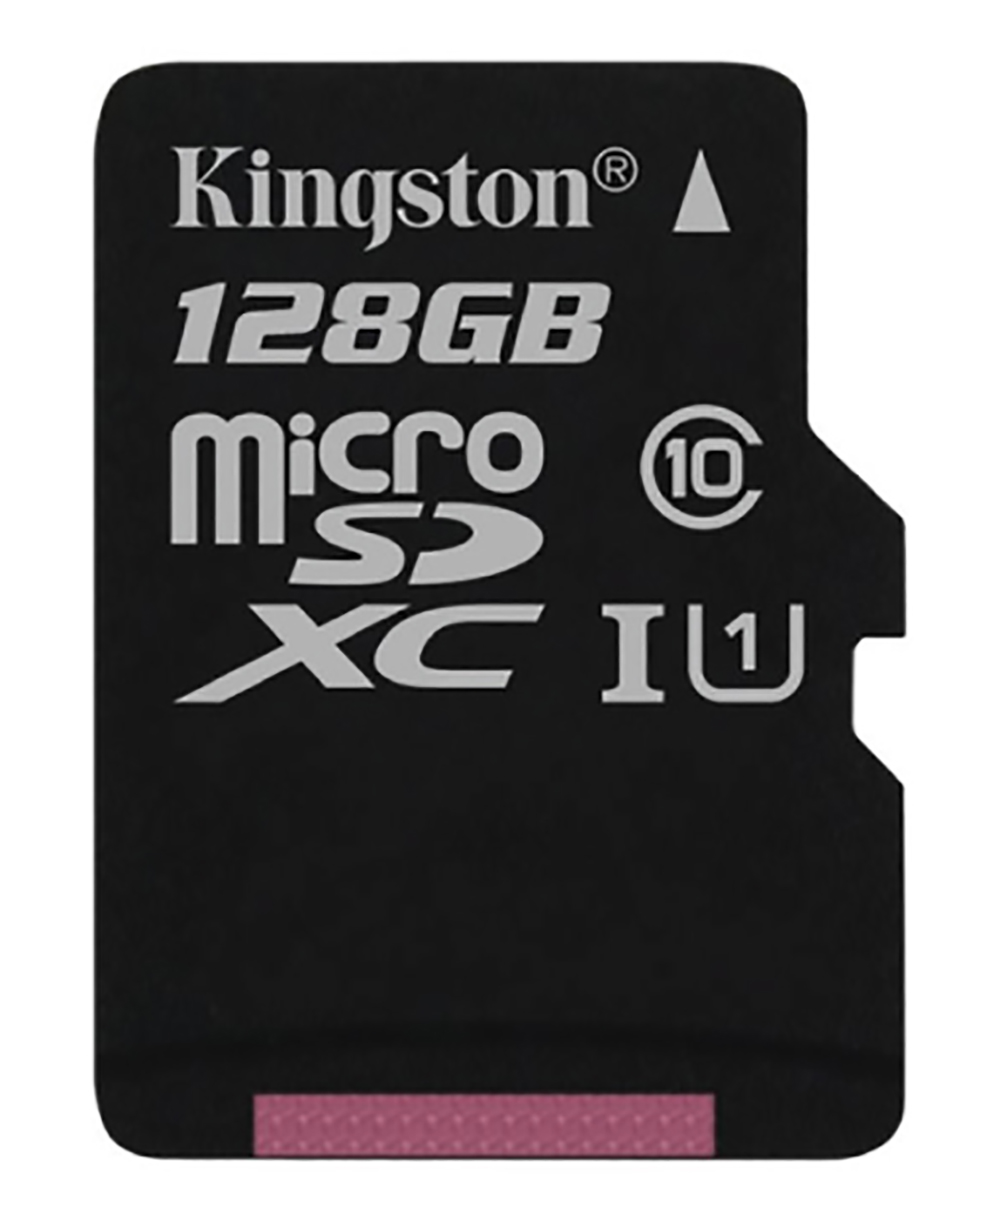 Kingston SDC10G2/128GBFR 128GB microSDXC Class 10